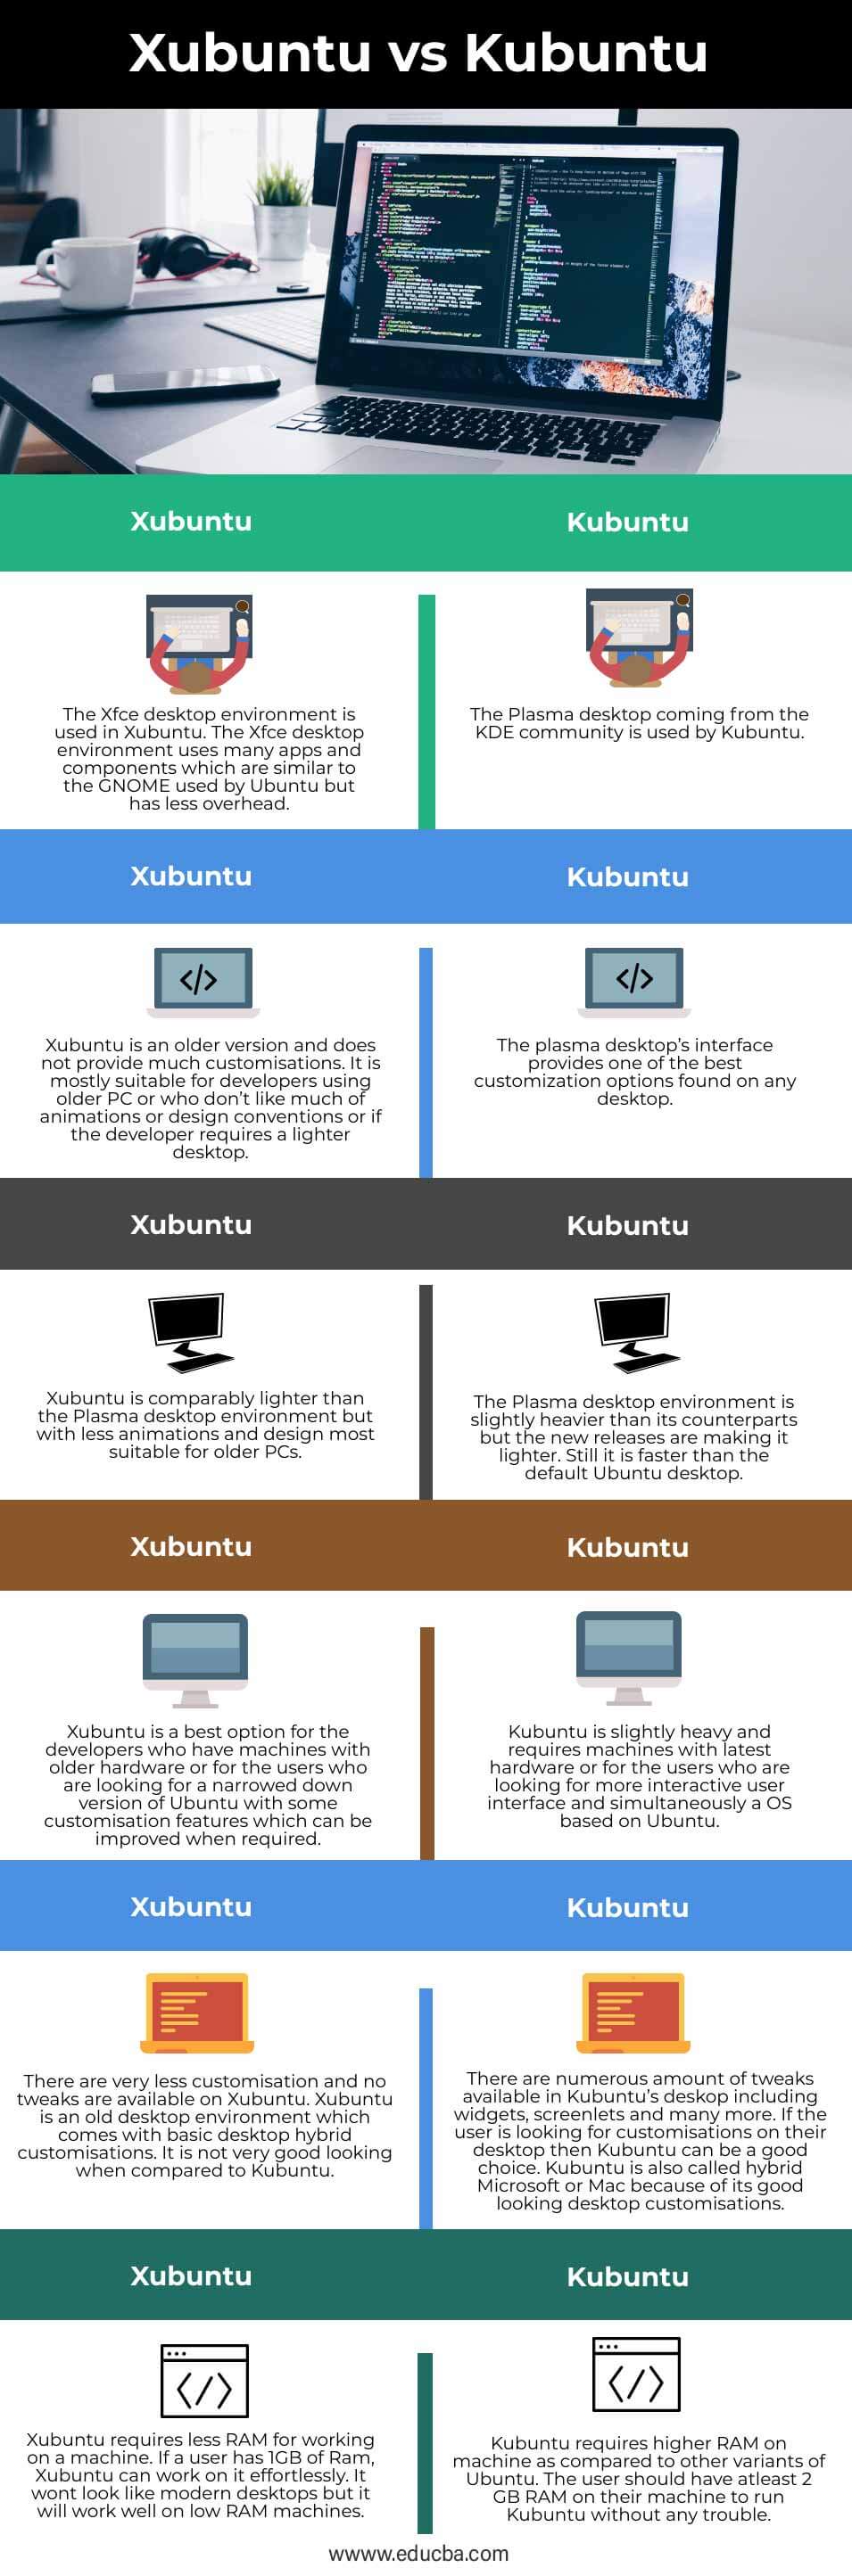 Xubuntu-vs-Kubuntu-info